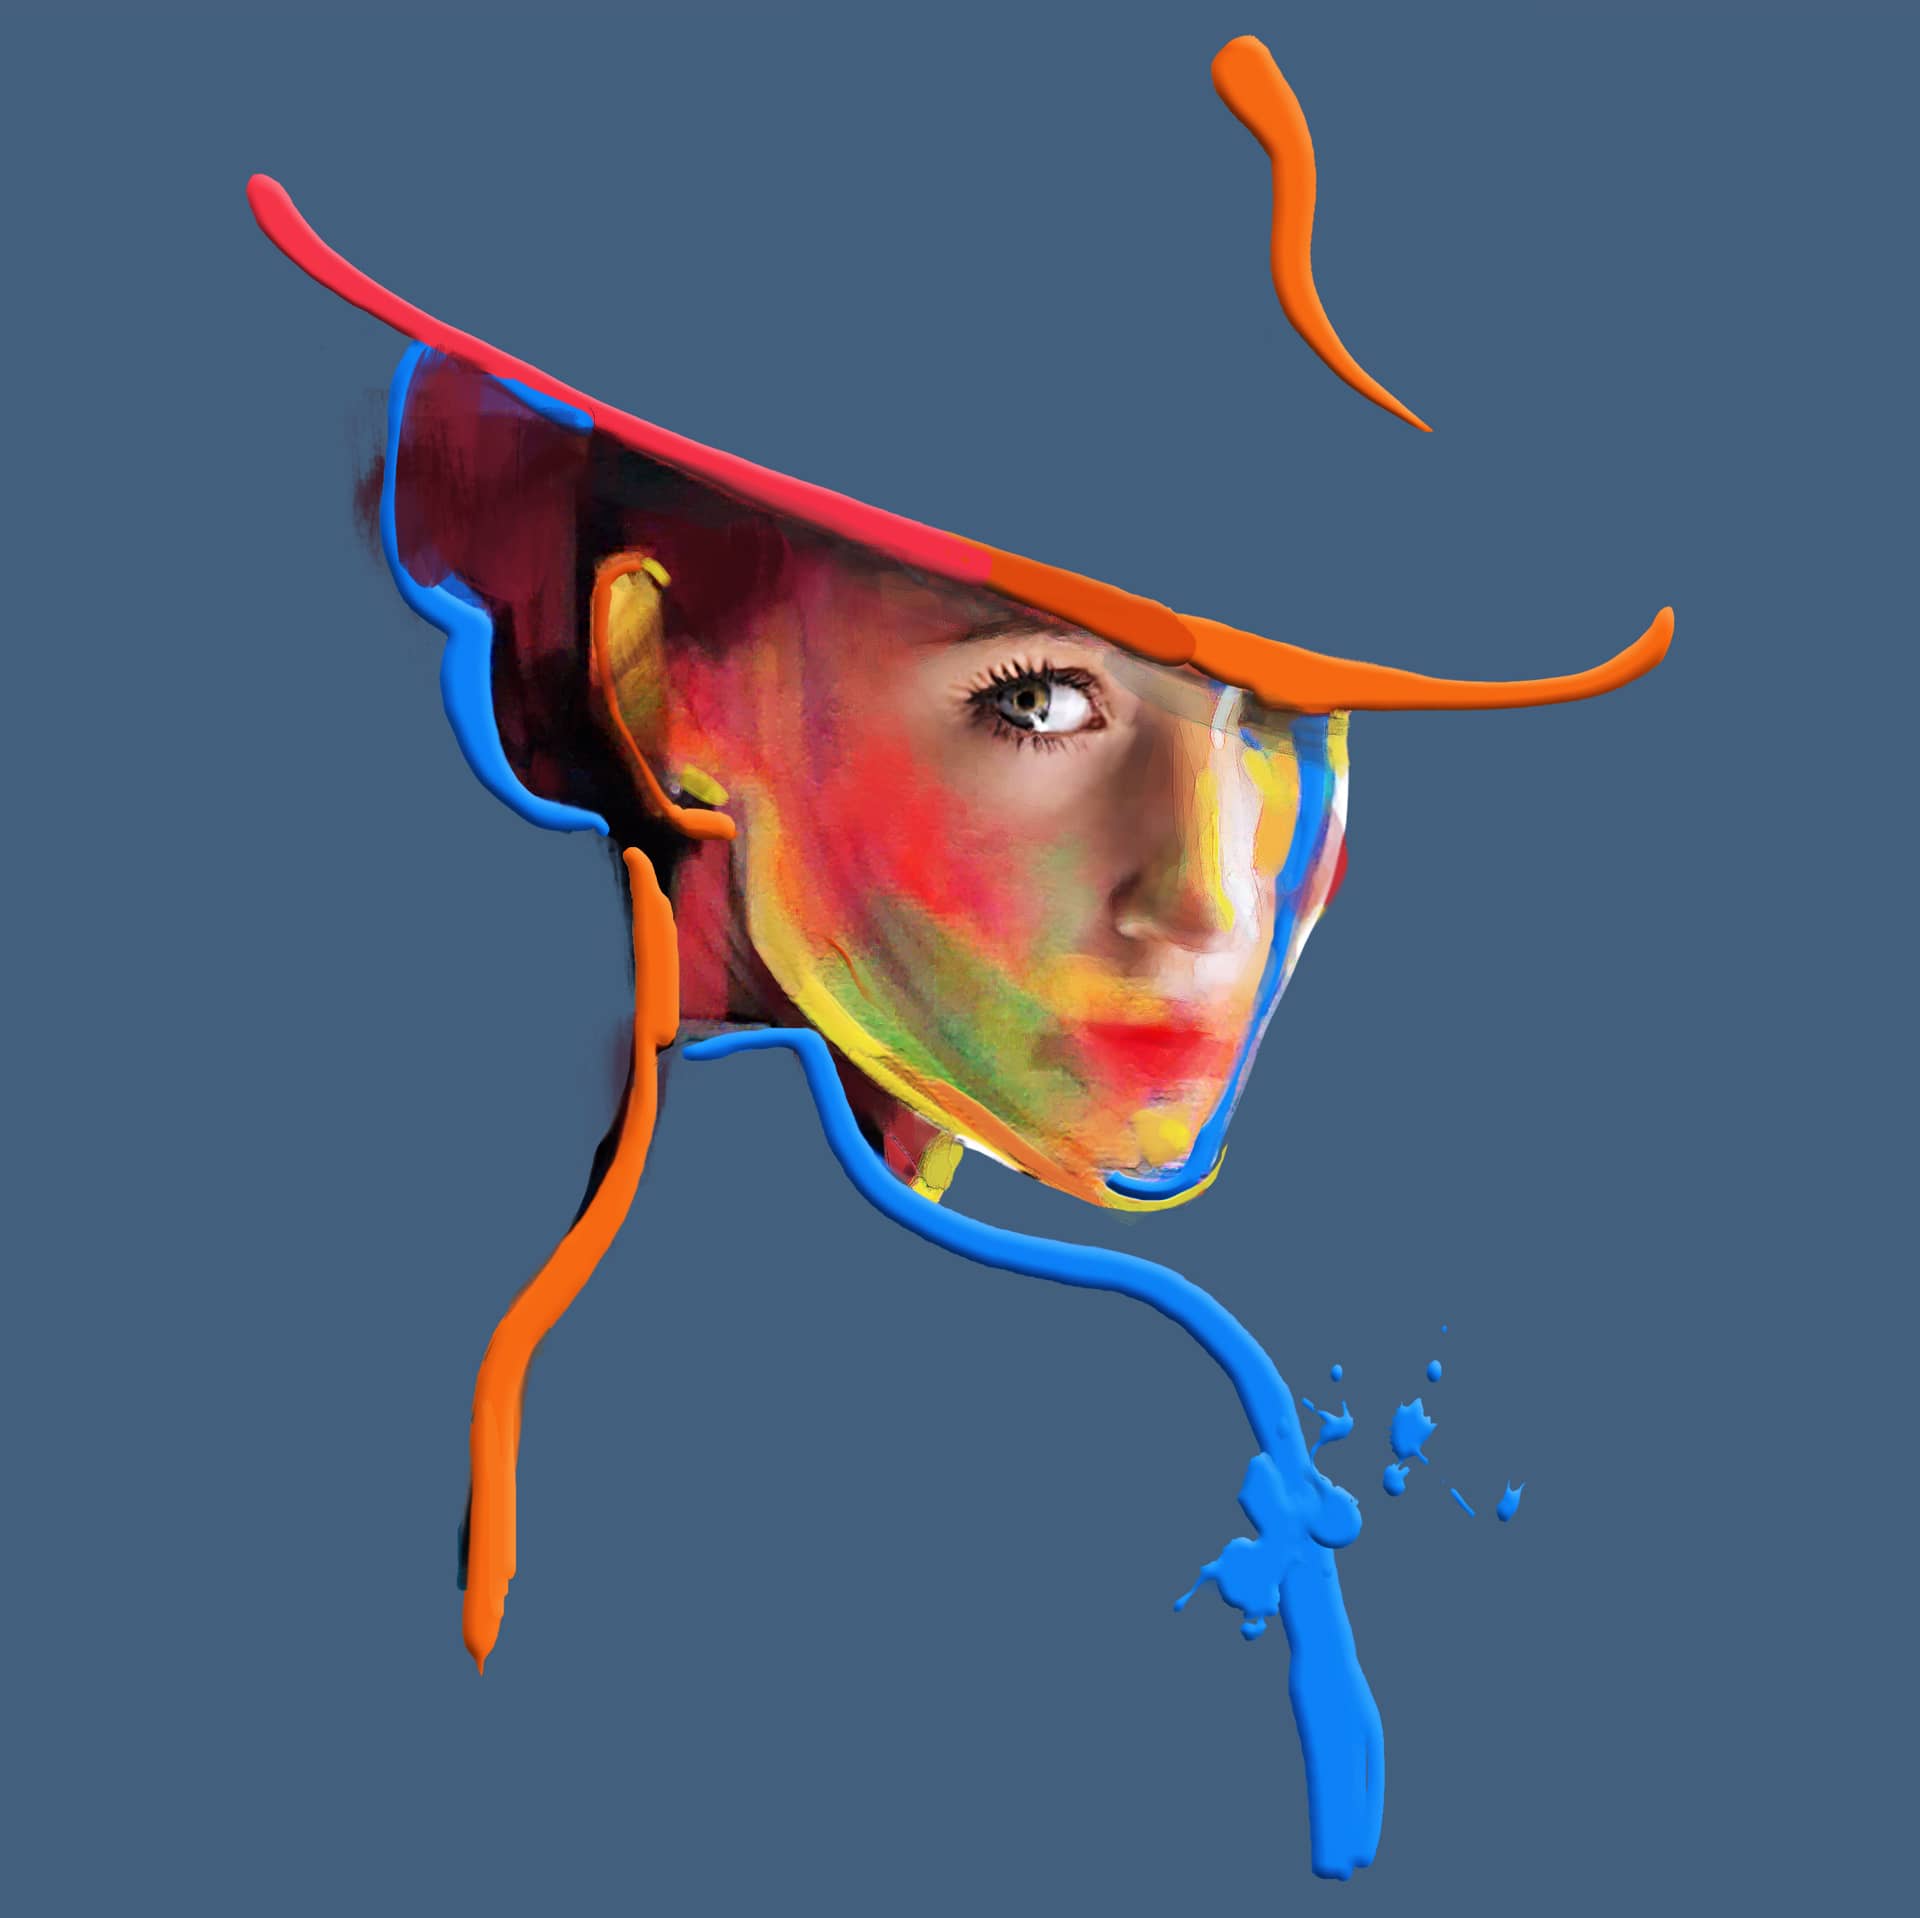 cover image for album "Colours" by Ksenia Parkhatskaya